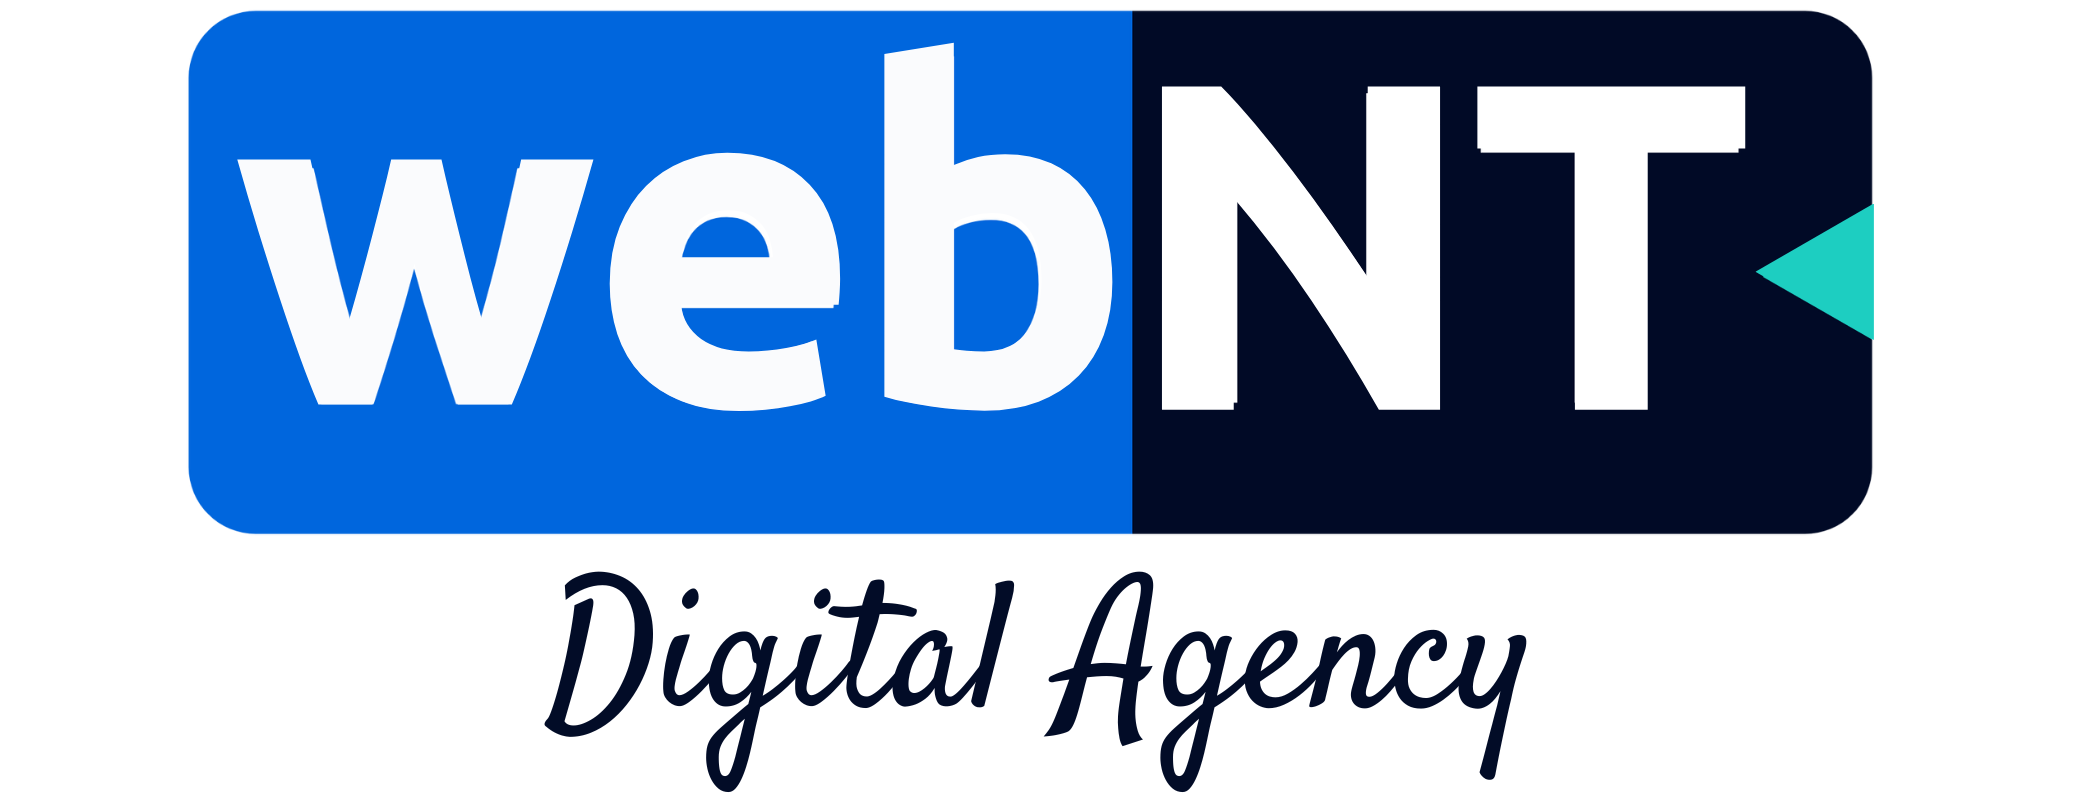 WebNT Digital Agency